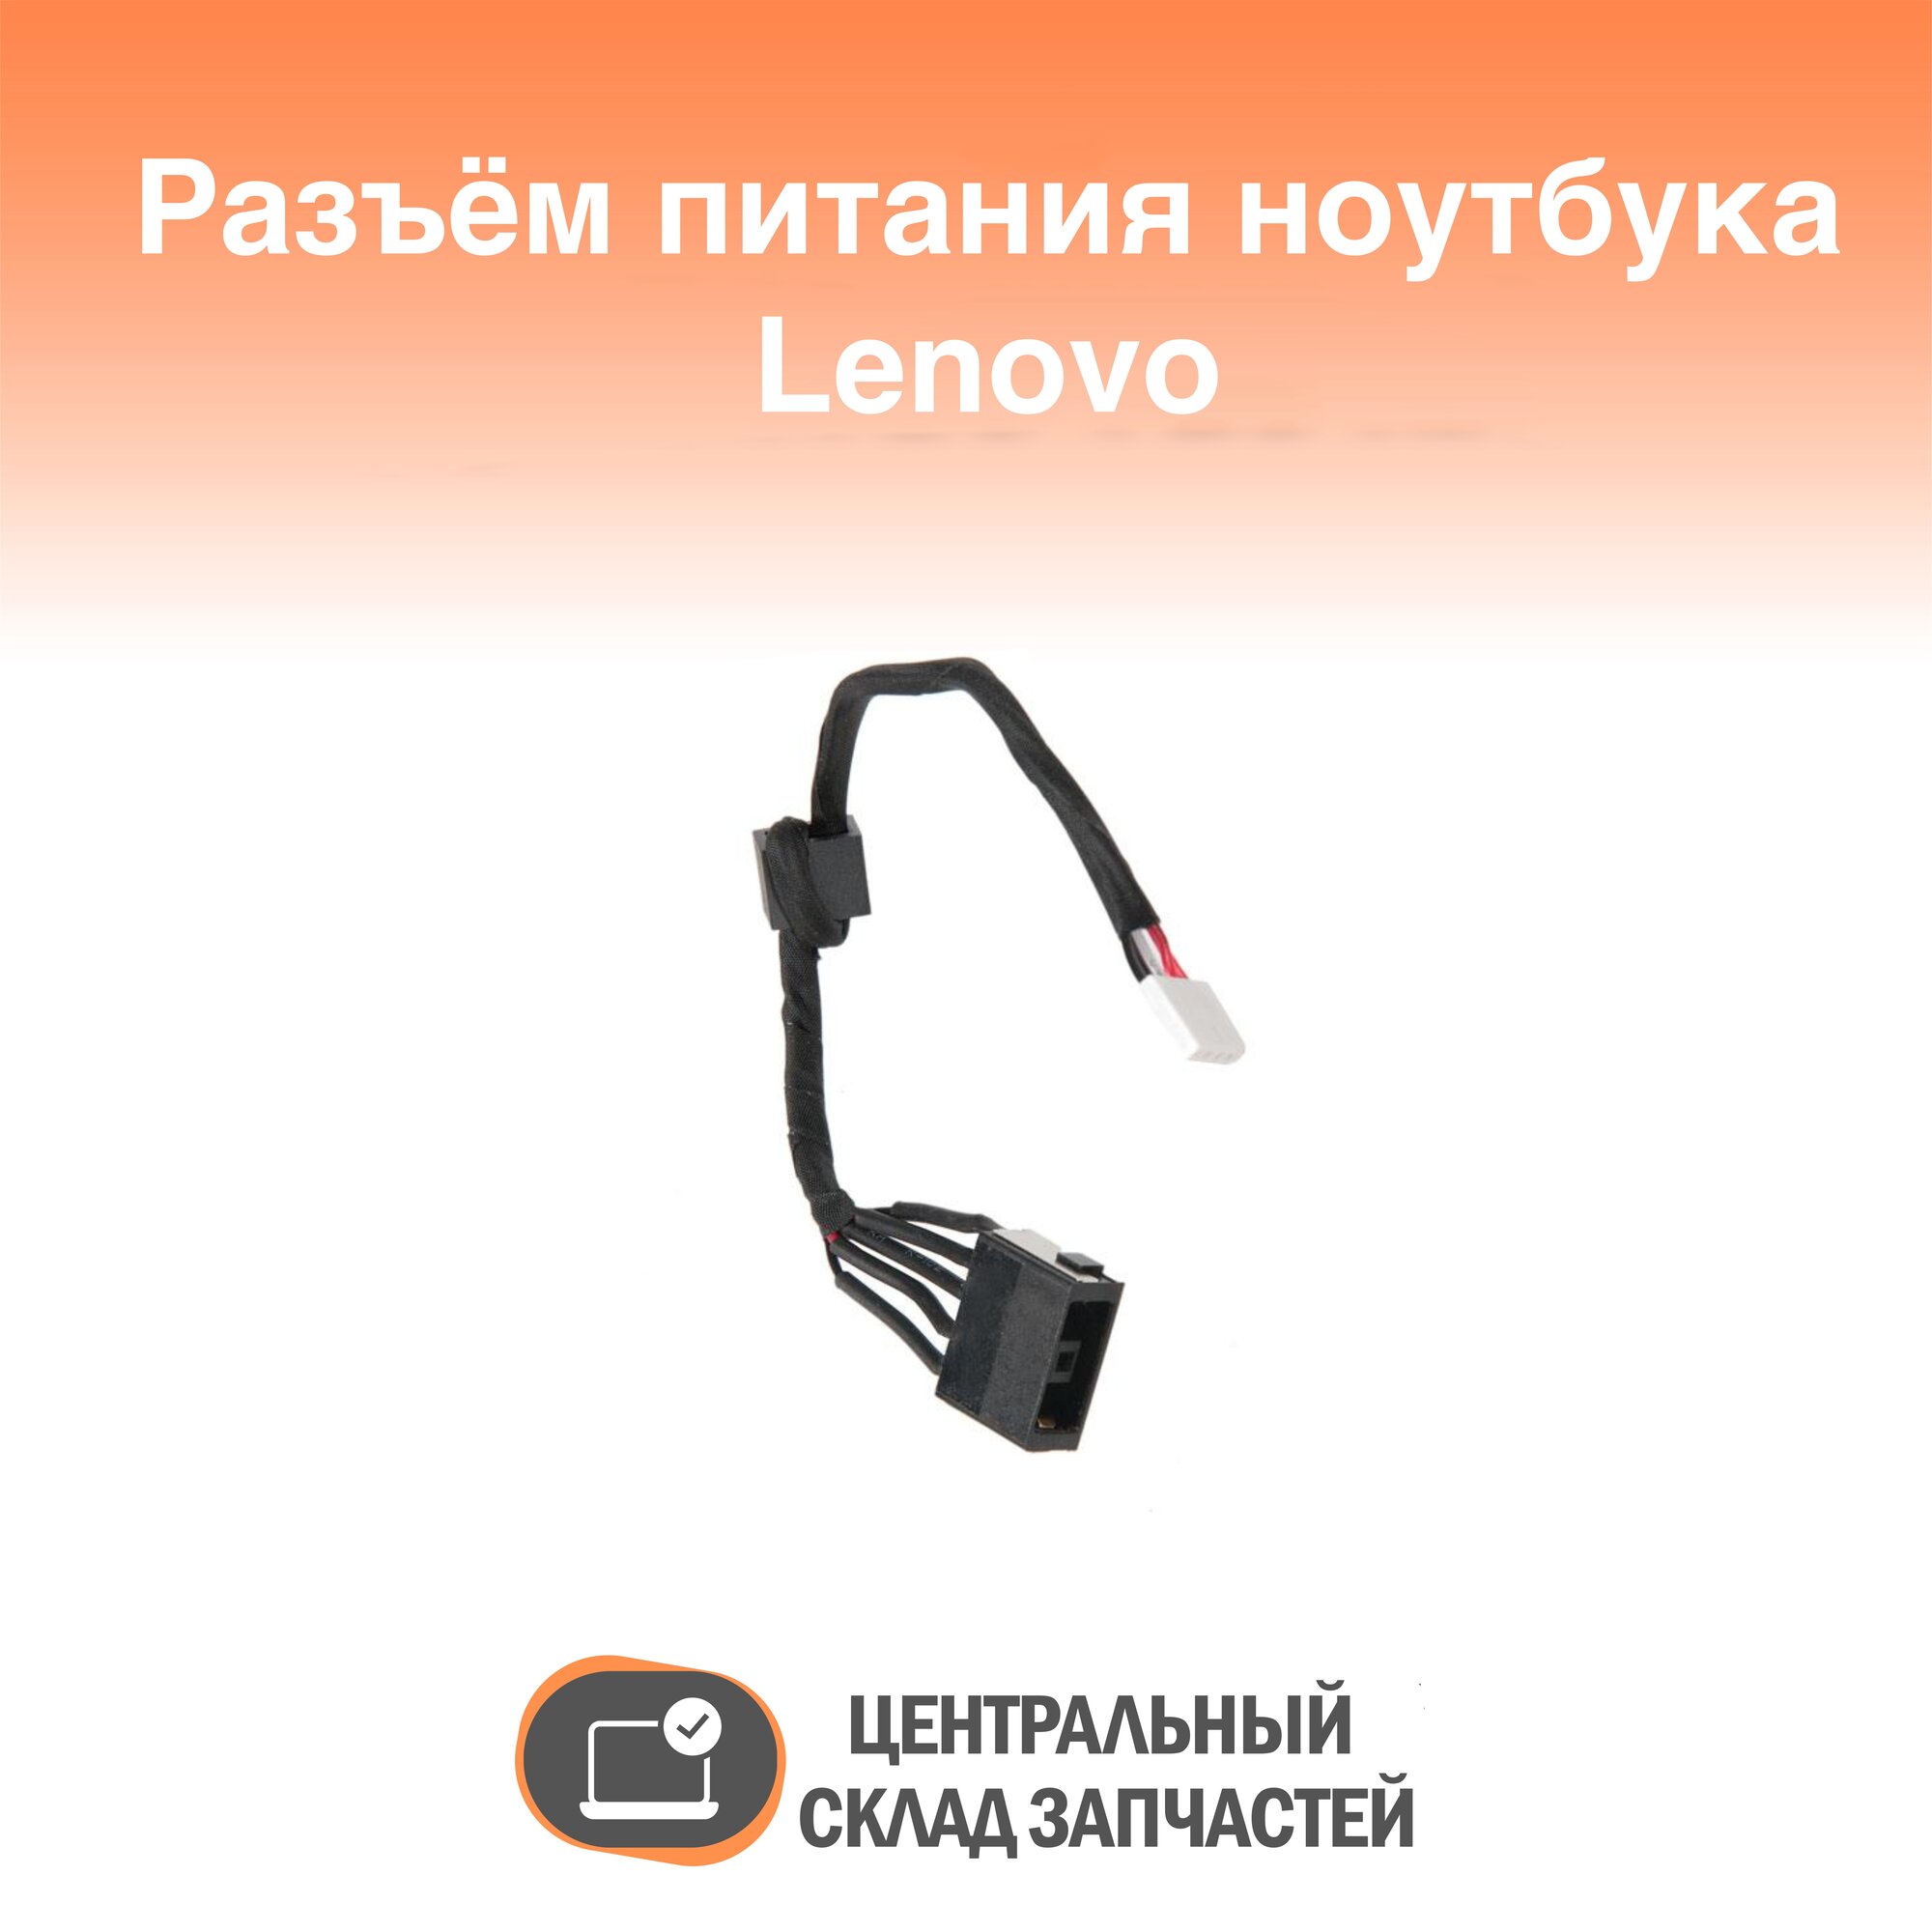 Power connector / Разъем питания для ноутбука Lenovo Ideapad G50-30, G50-40, G50-45, G50-50 с кабелем 13,5 см